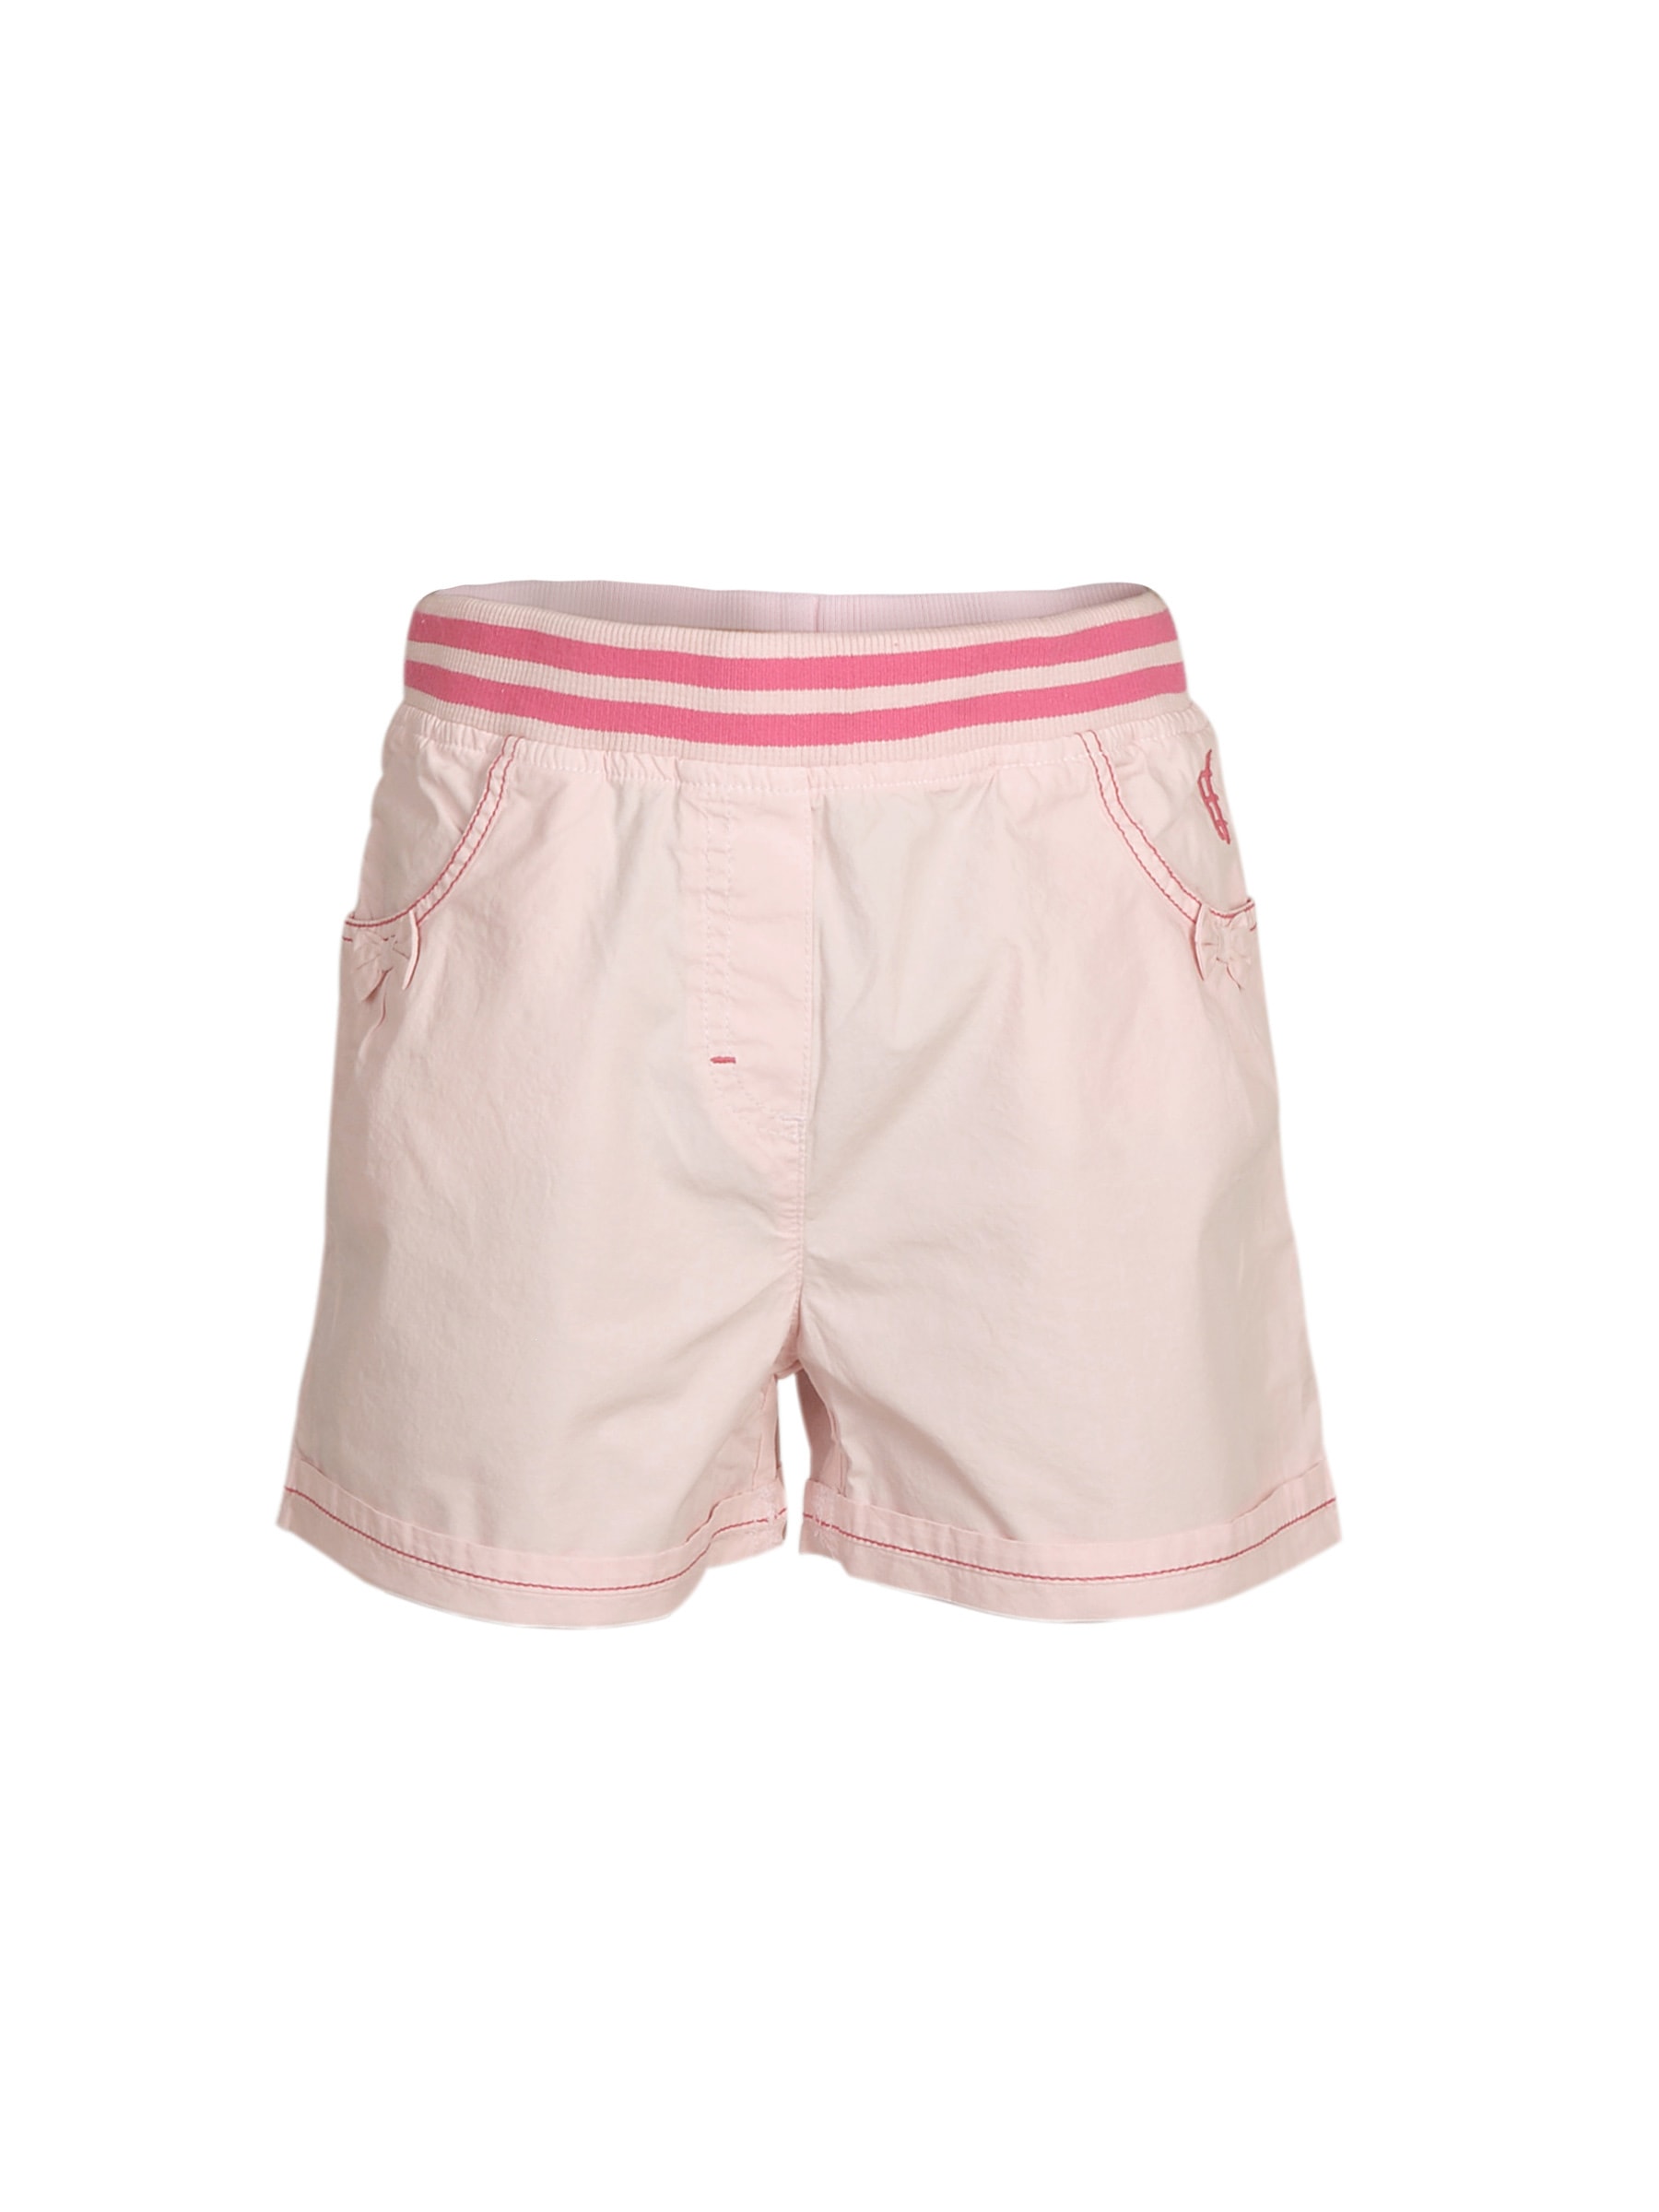 Allen Solly Kids Girls Poplin Pink Shorts